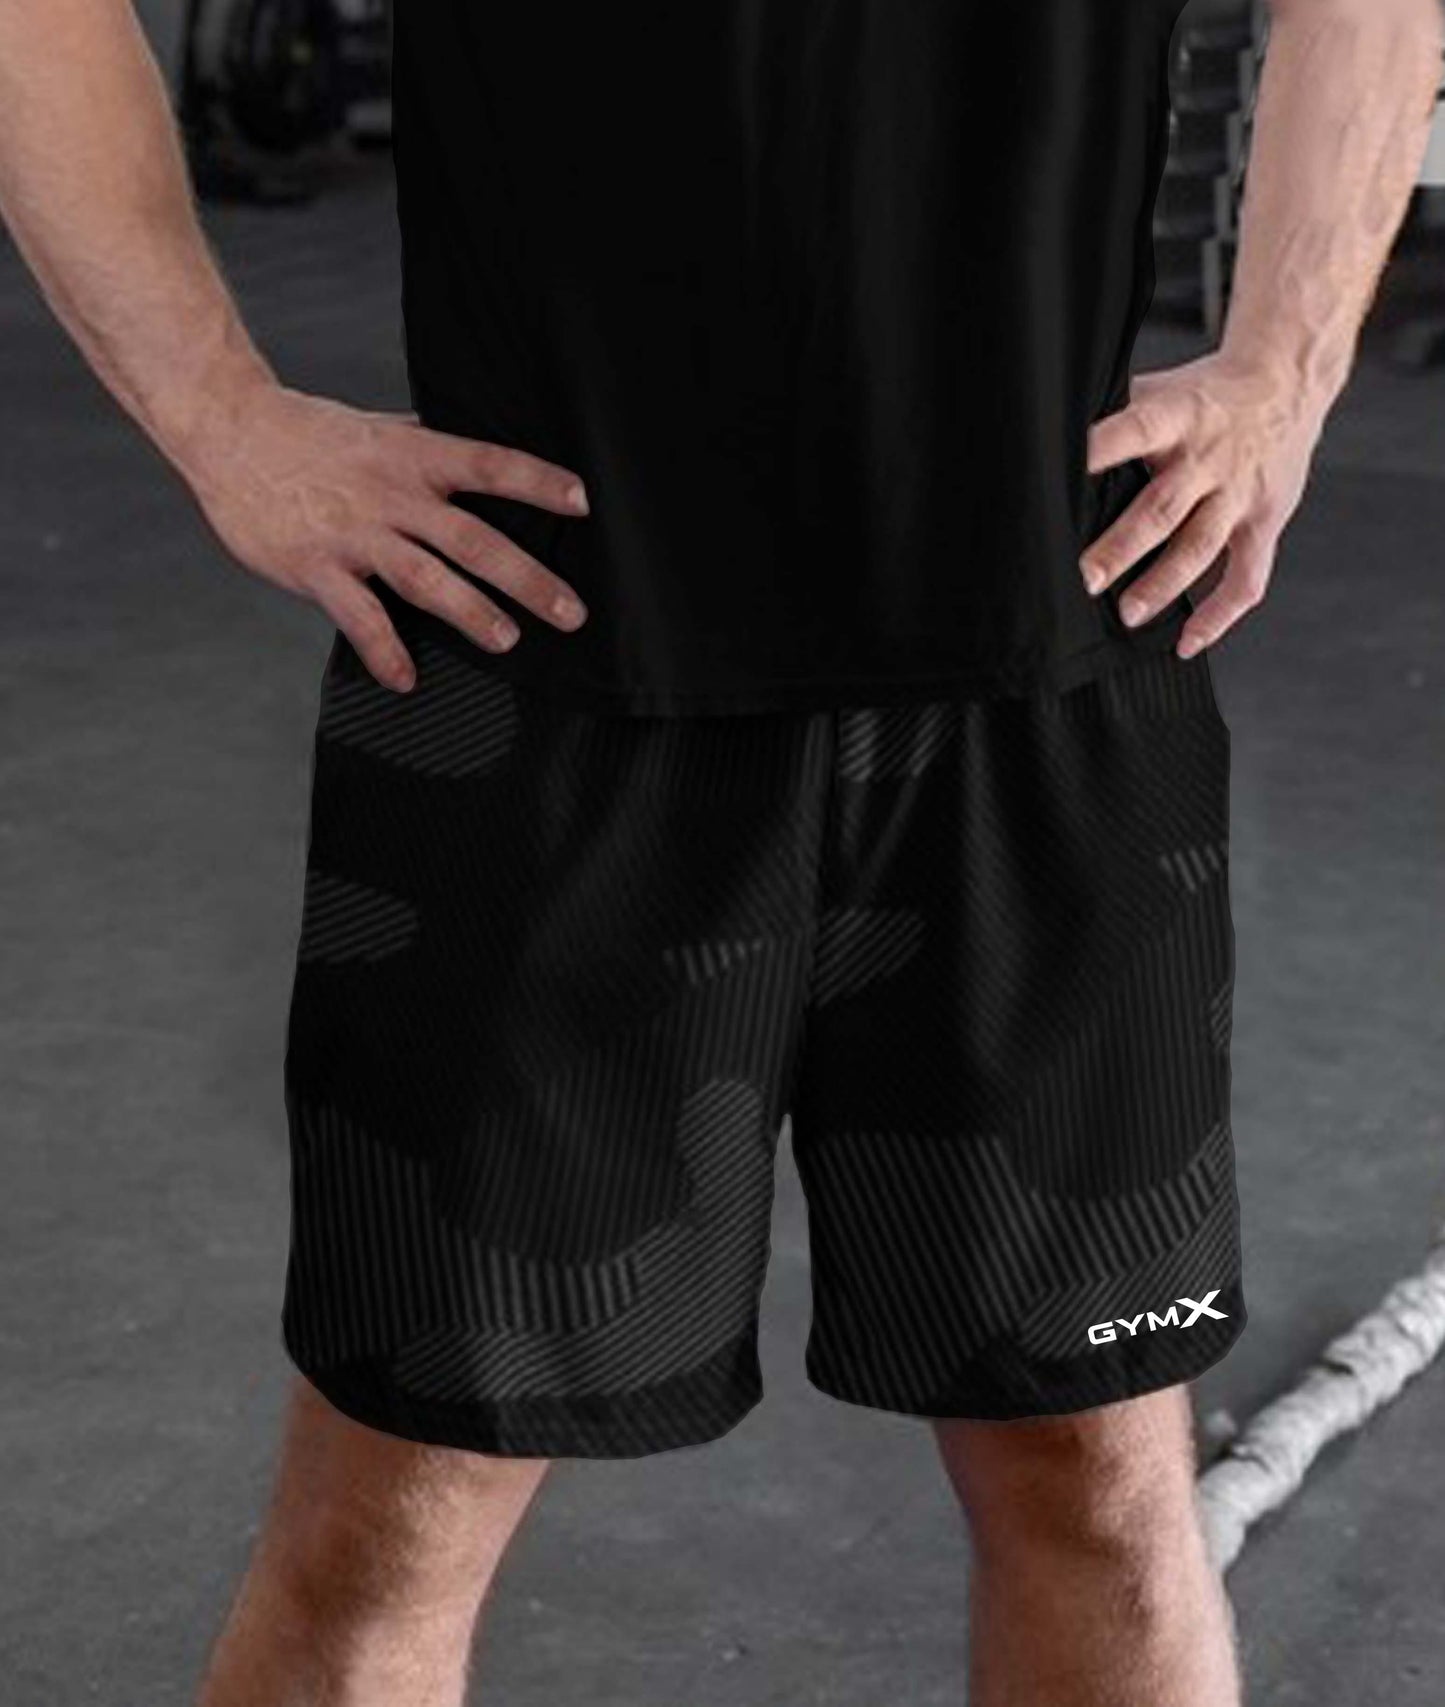 Vitality GymX Shorts: Oblivion Black Camo